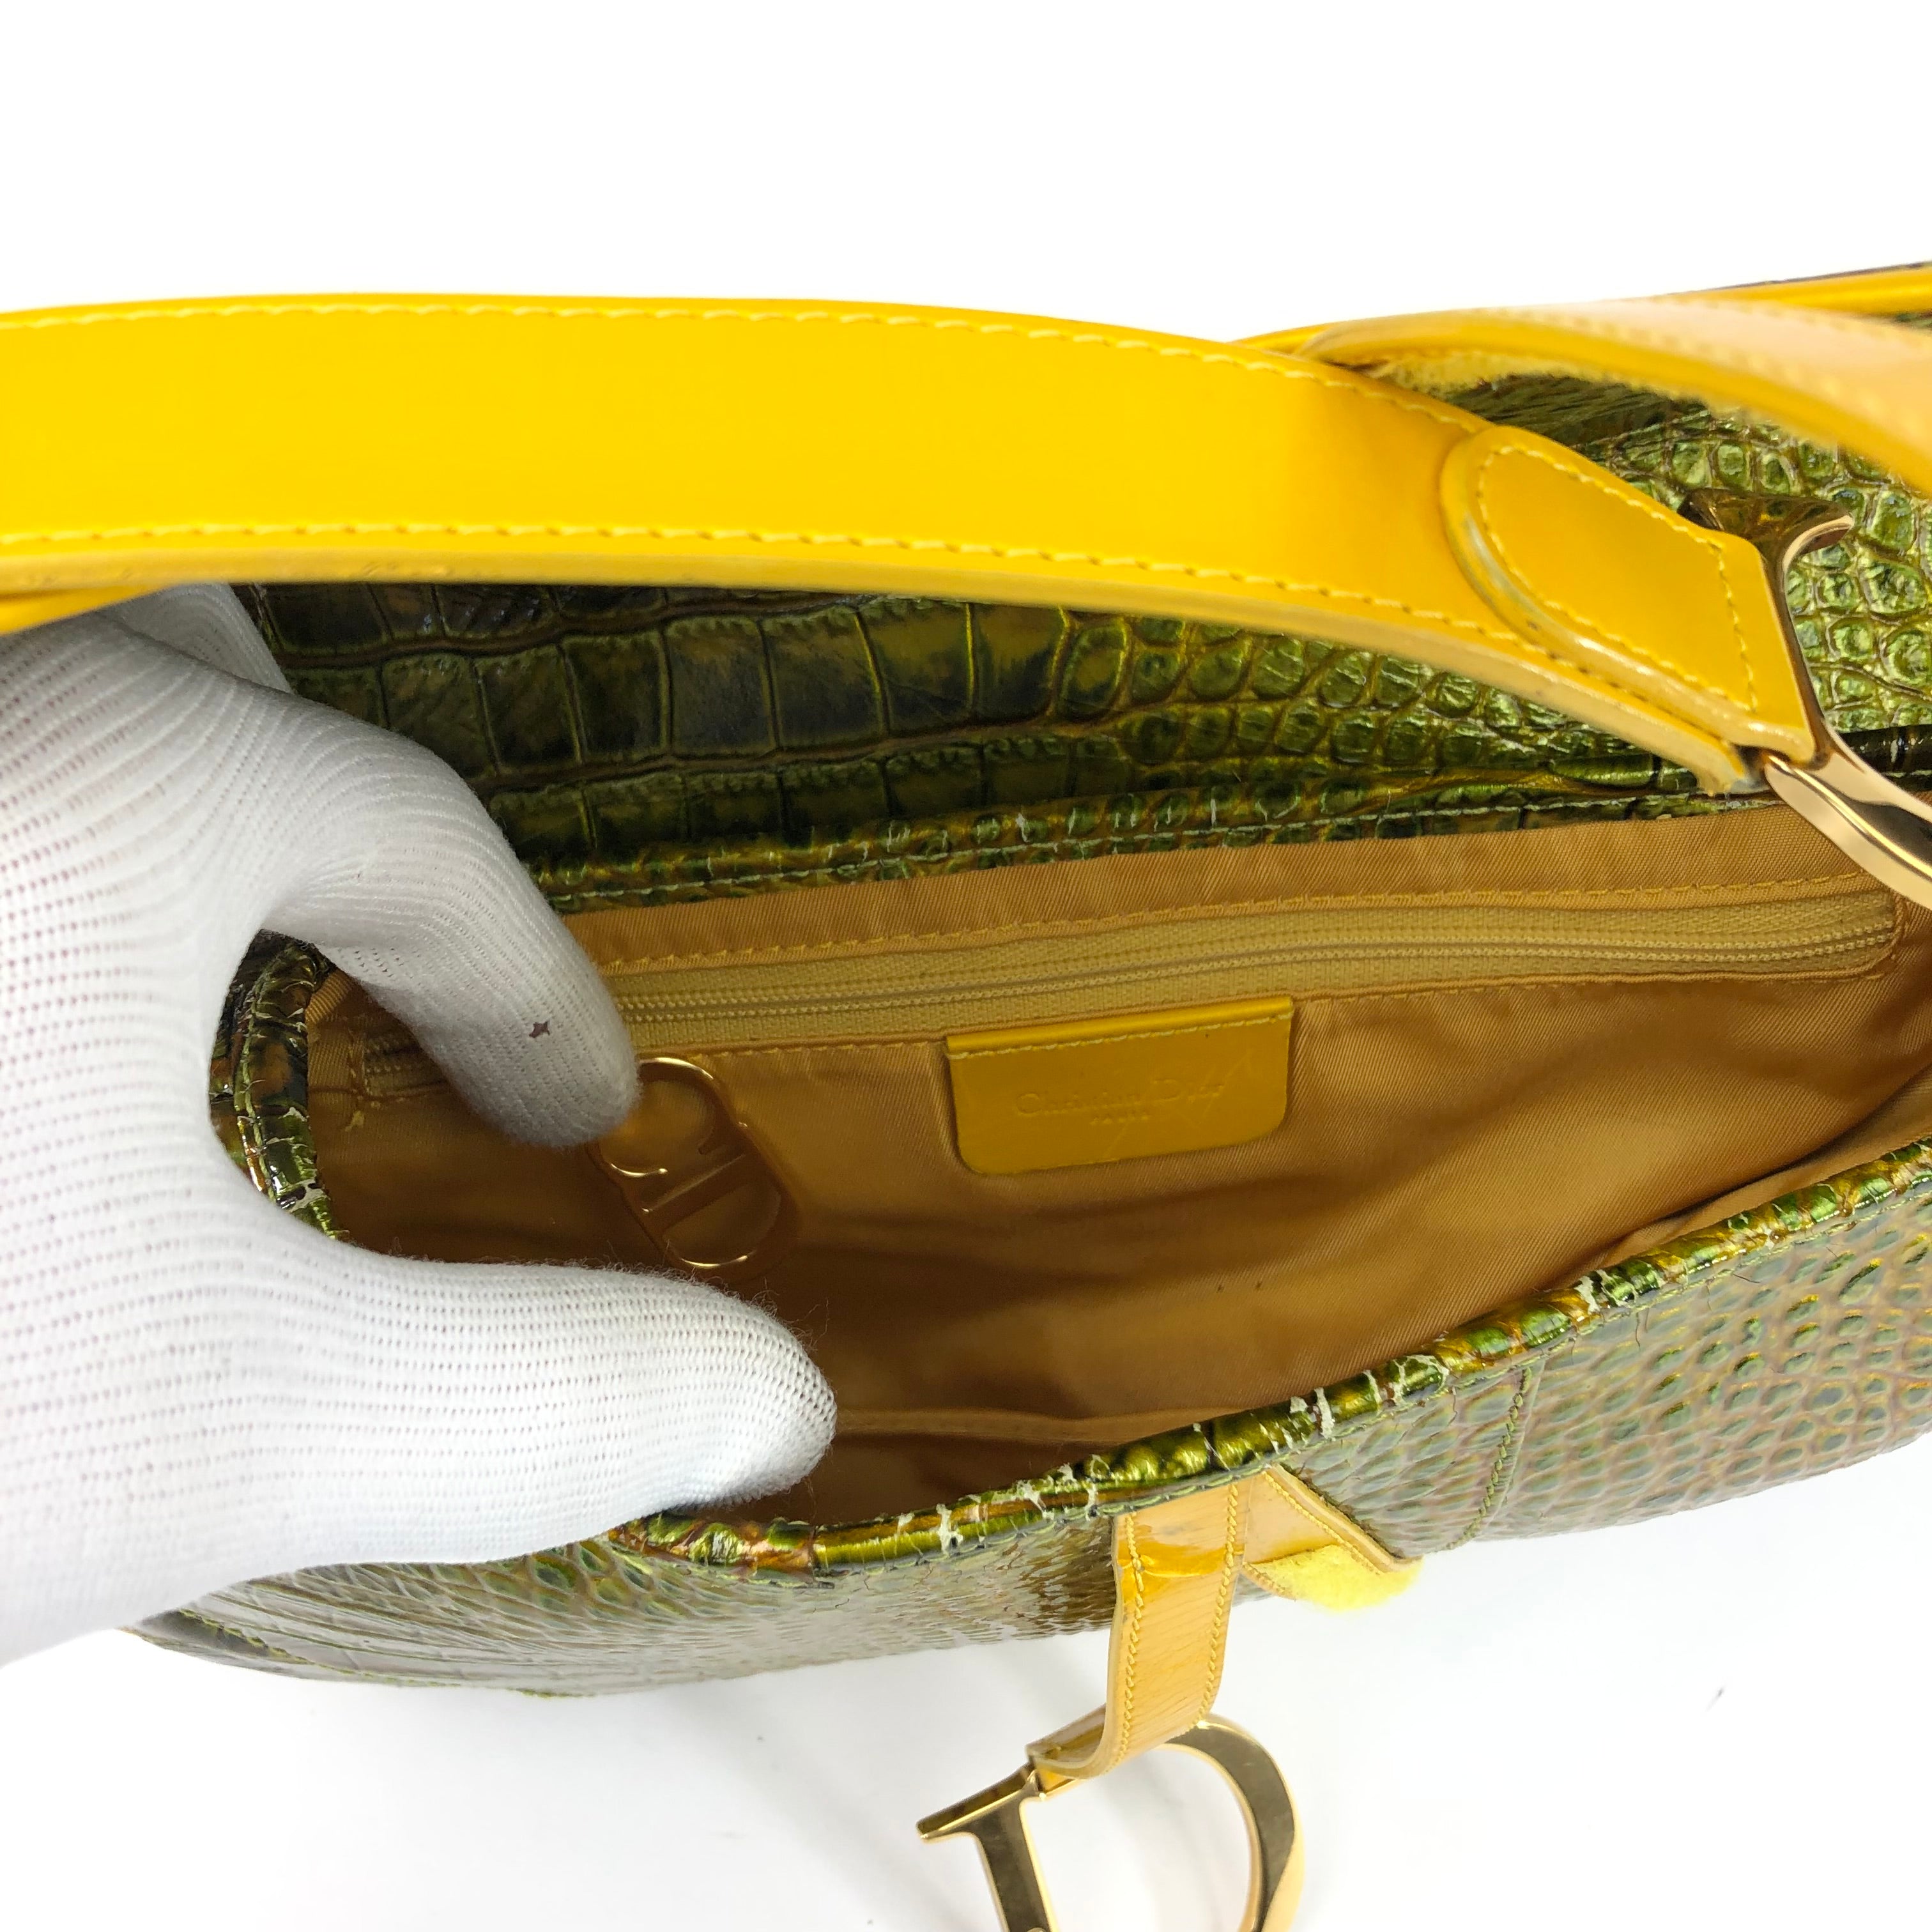 Christian Dior Crocodile Embossed Leather Saddle Bag